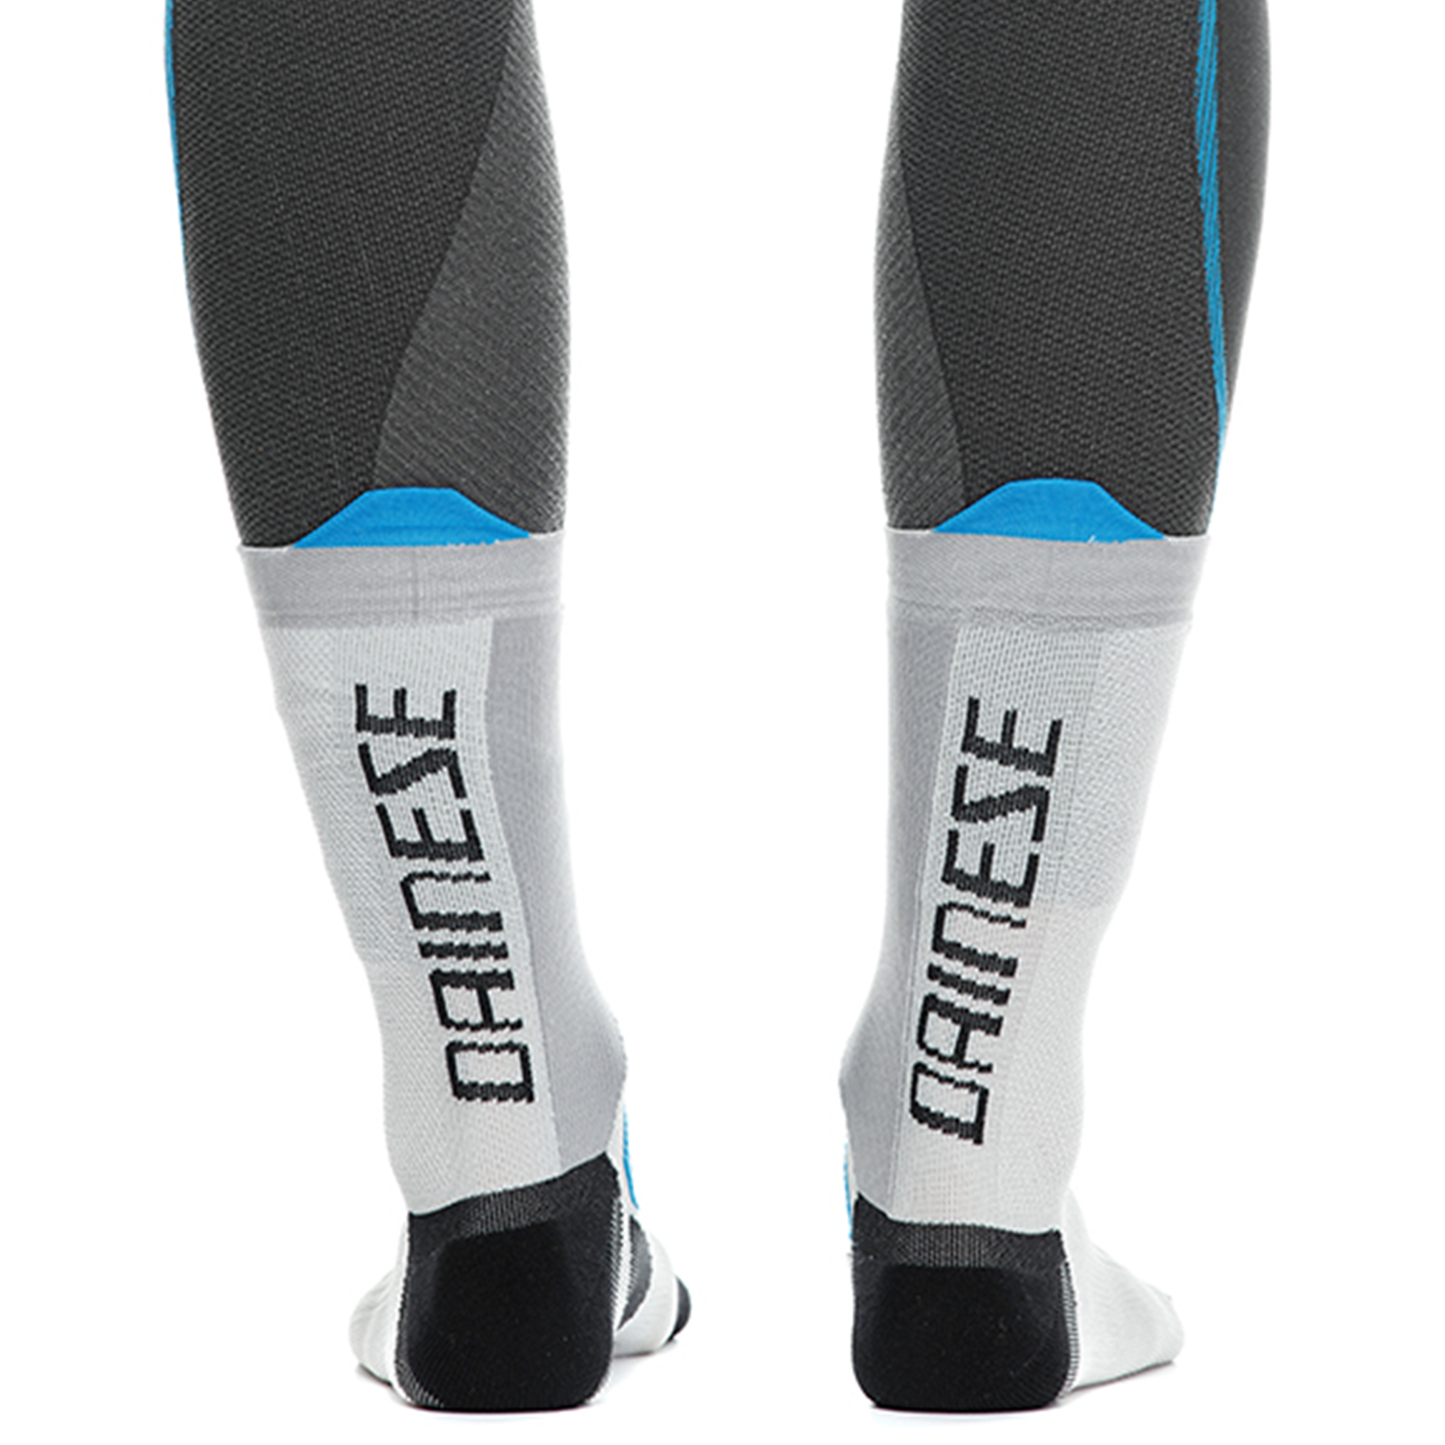 Dainese Dry Mid Socks - Black/Blue (607)